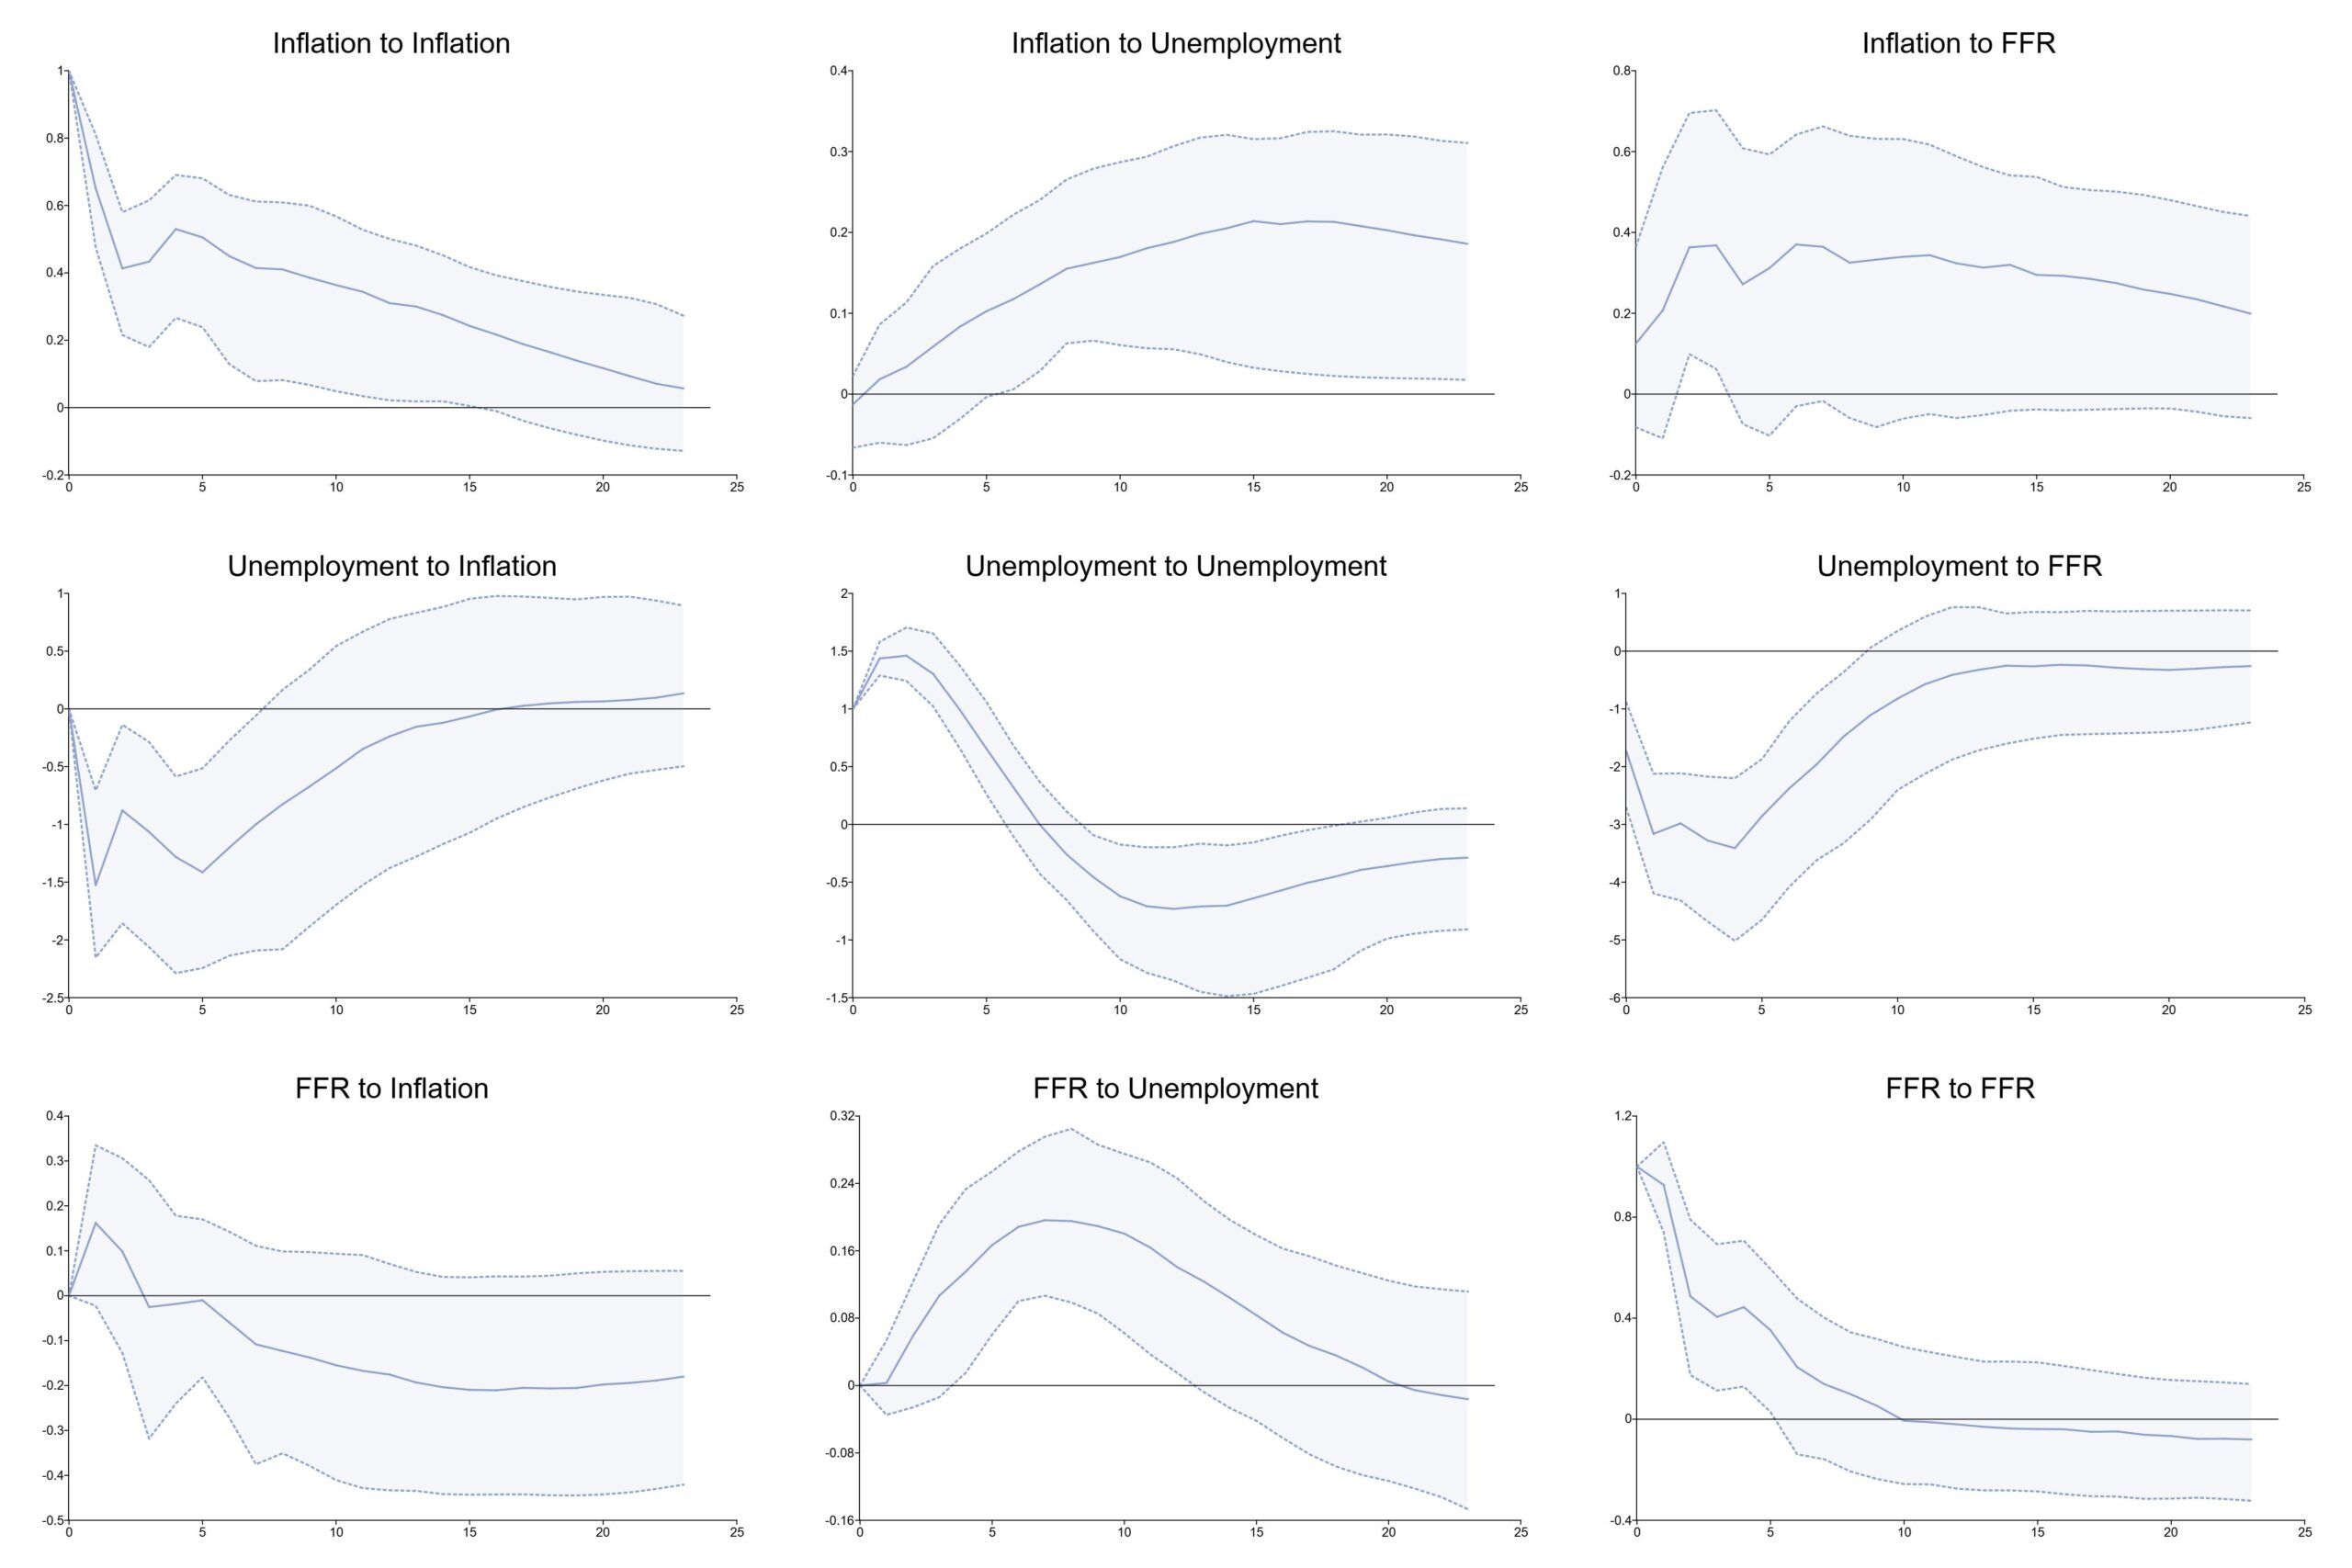 Impulse response function demonstrating monetary policy impacts on macroeconomic indicators. 